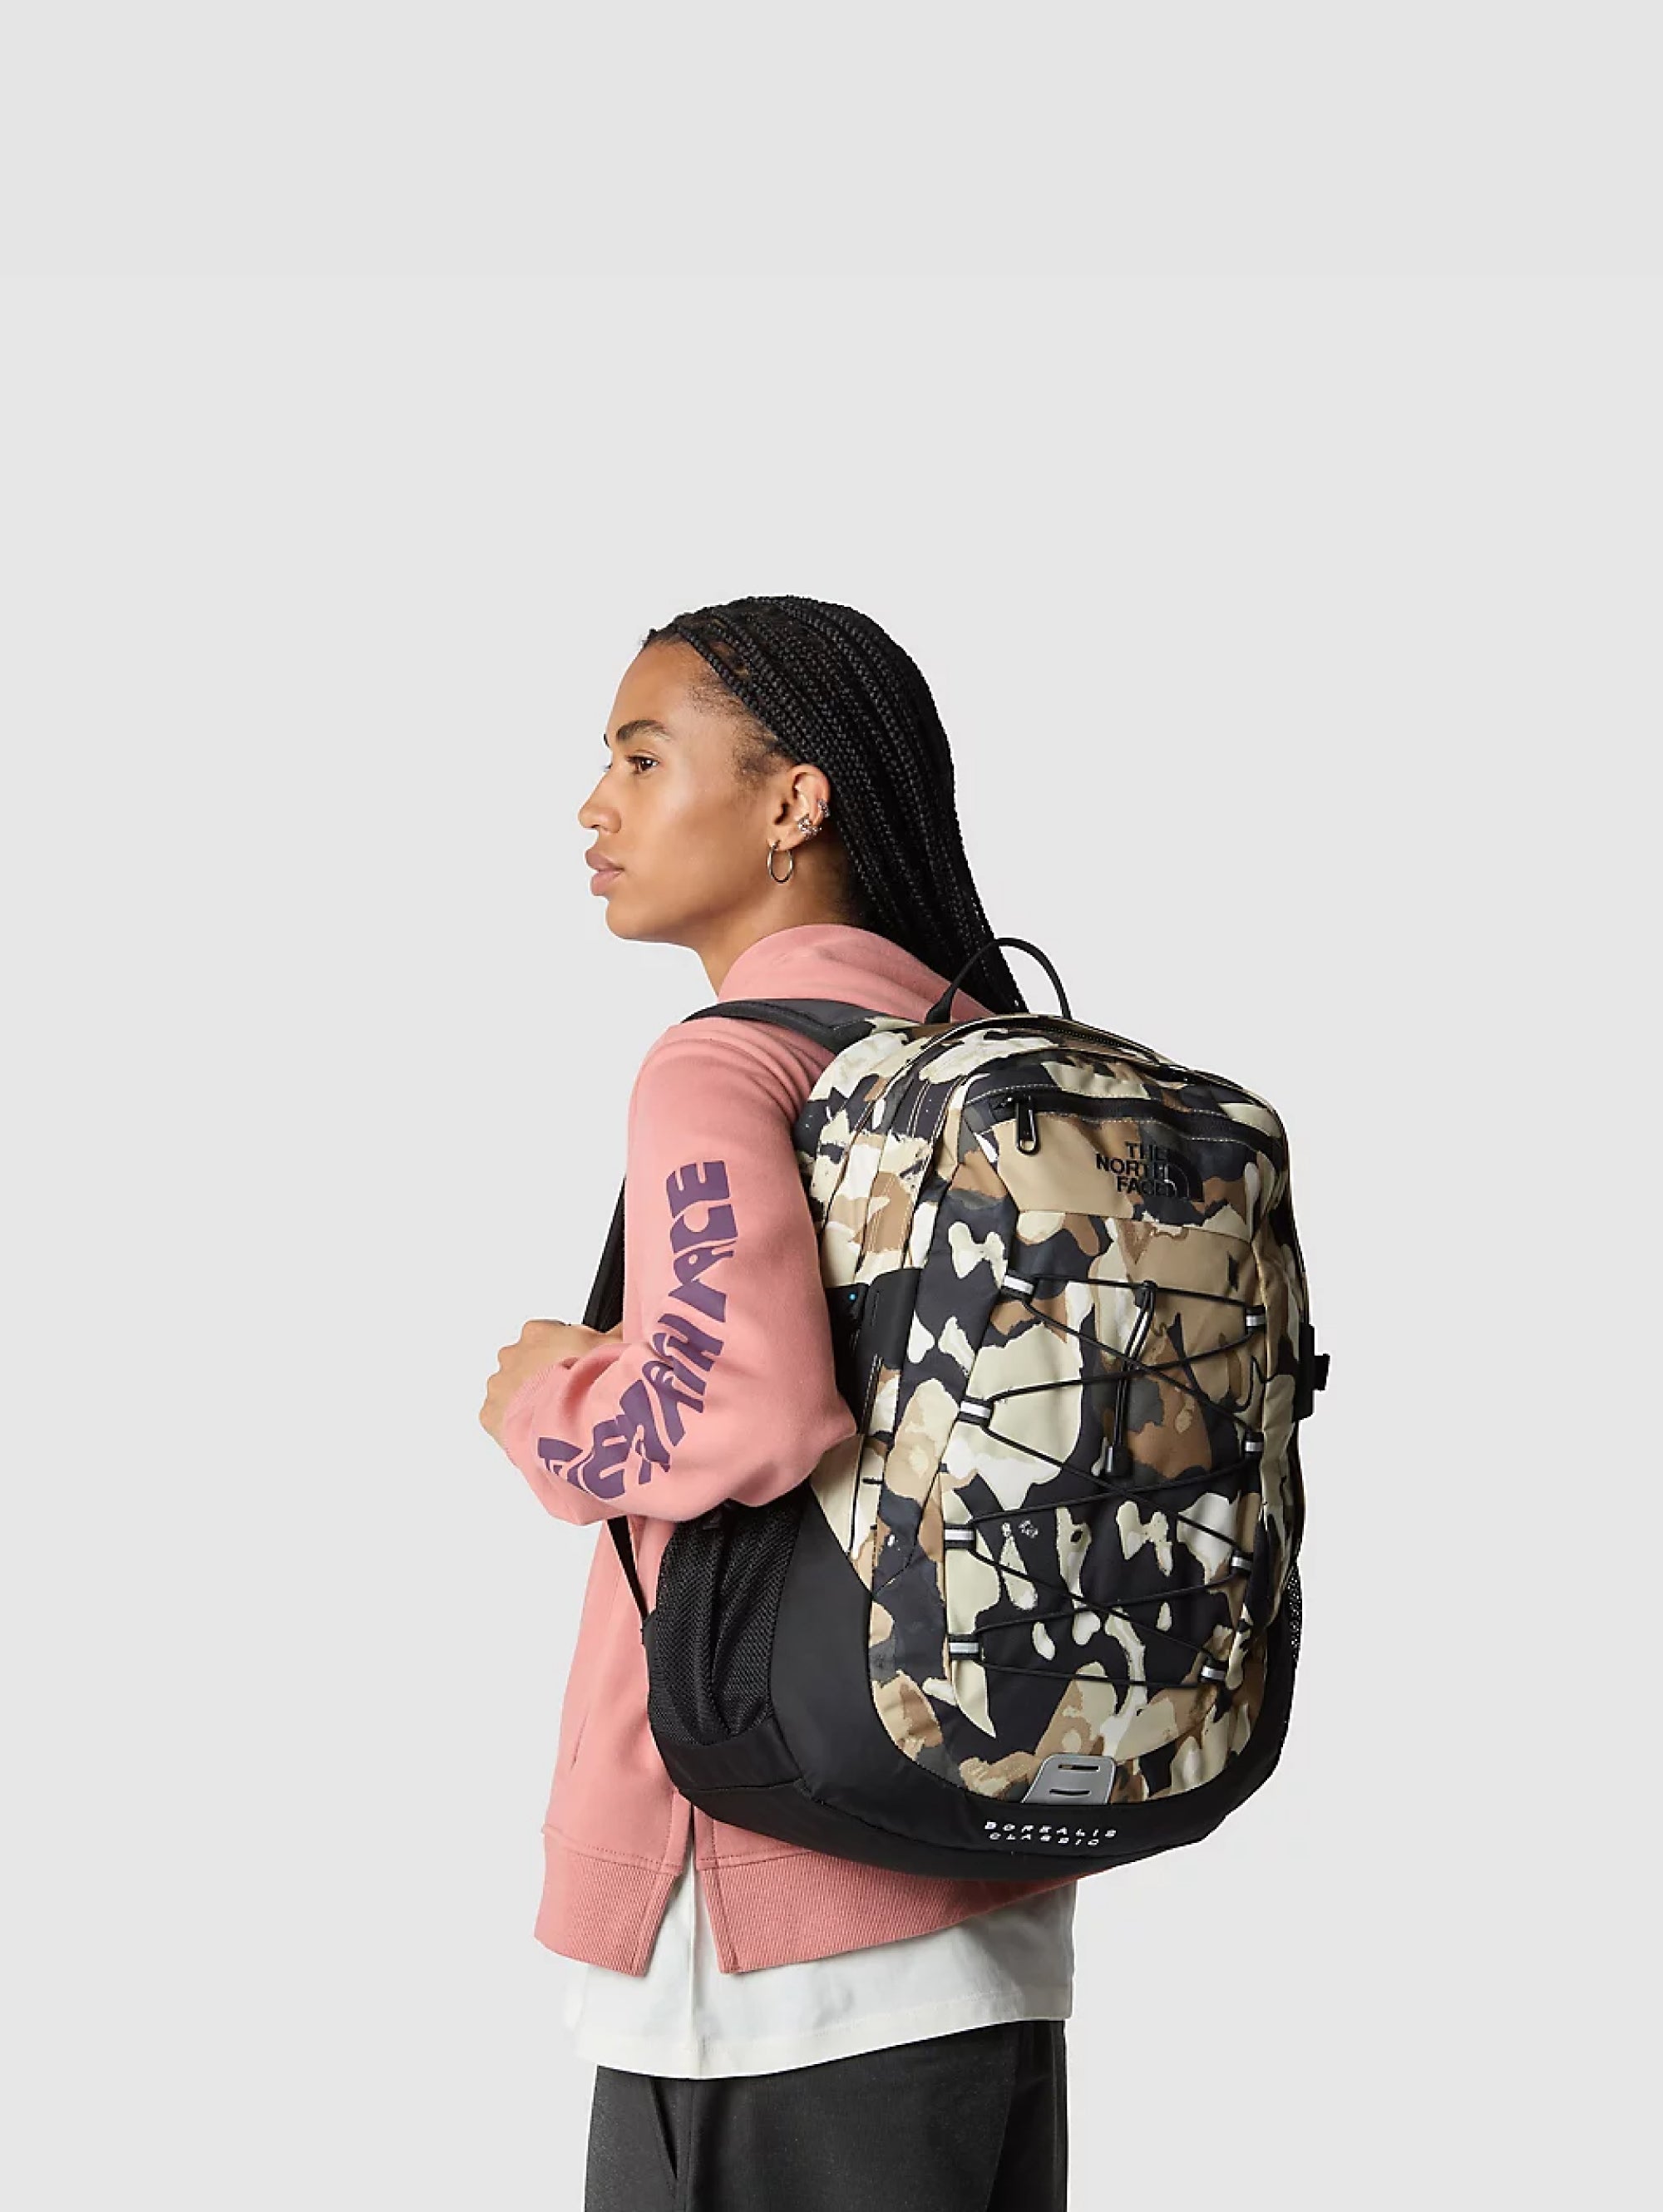 Borealis Classic Camouflage Beige/Black model backpack